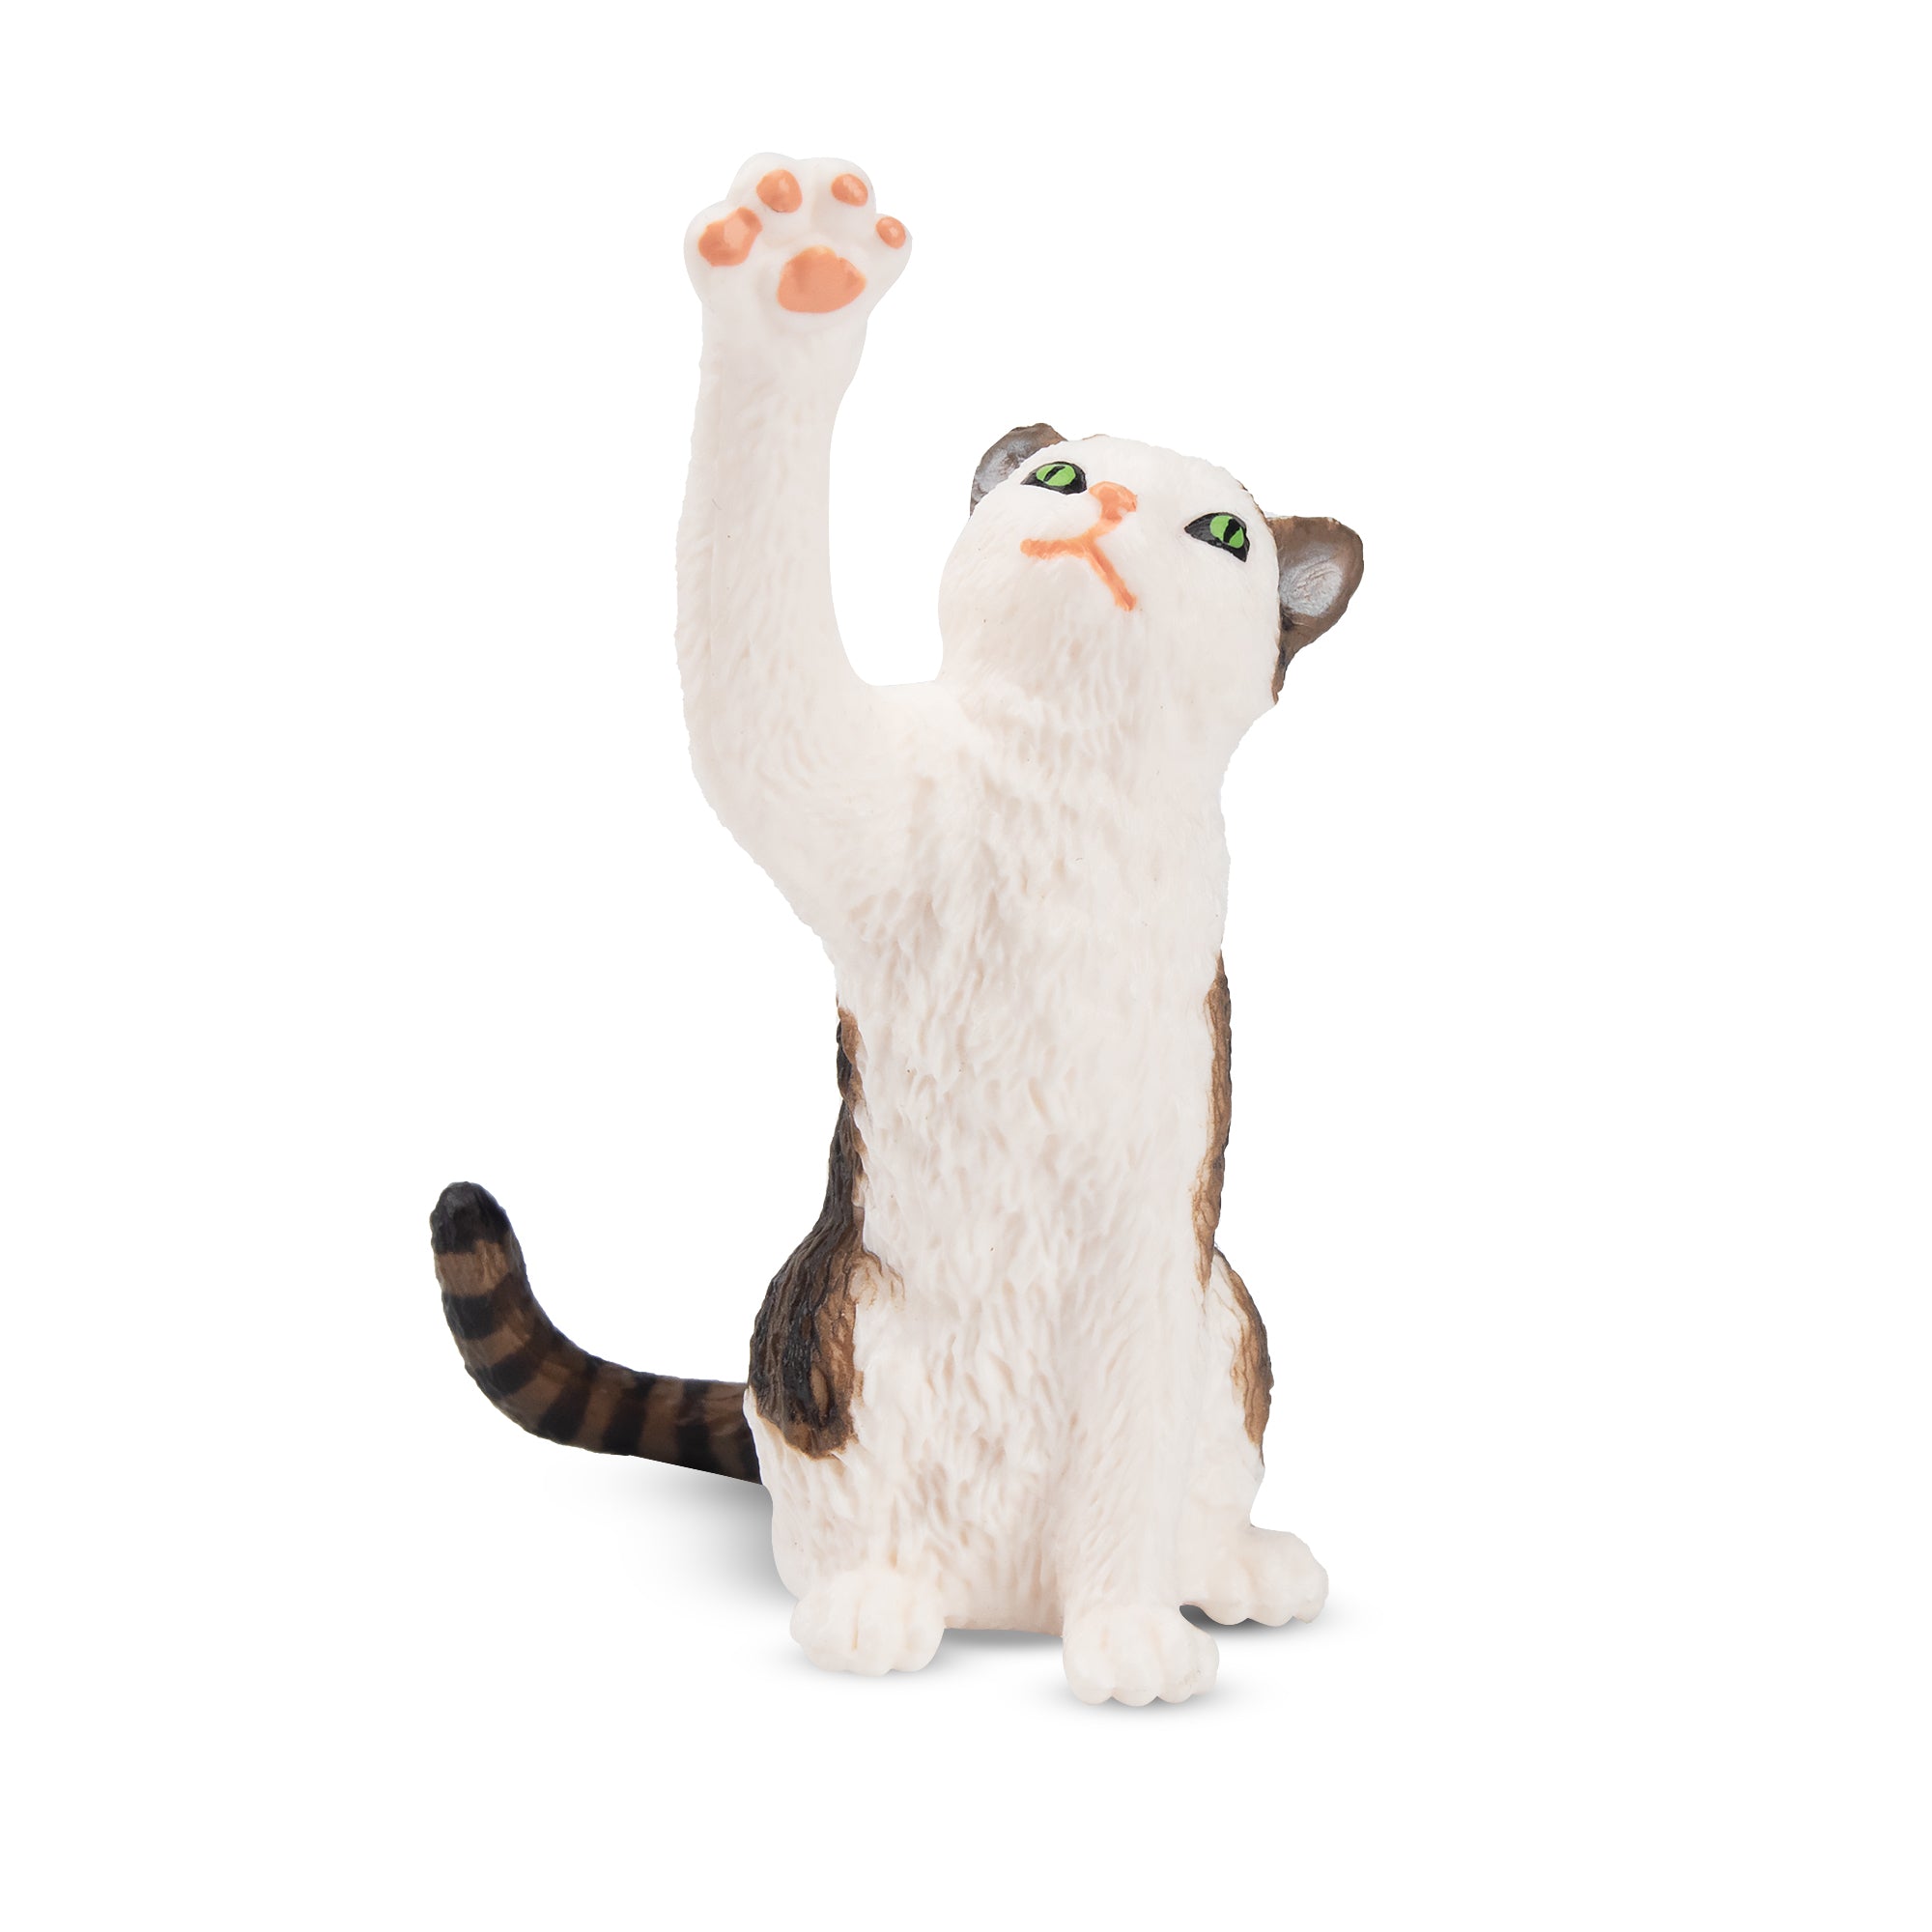 Toymany-Mini-Waving-Tabby-and-White-Cat-Figurine-Toy